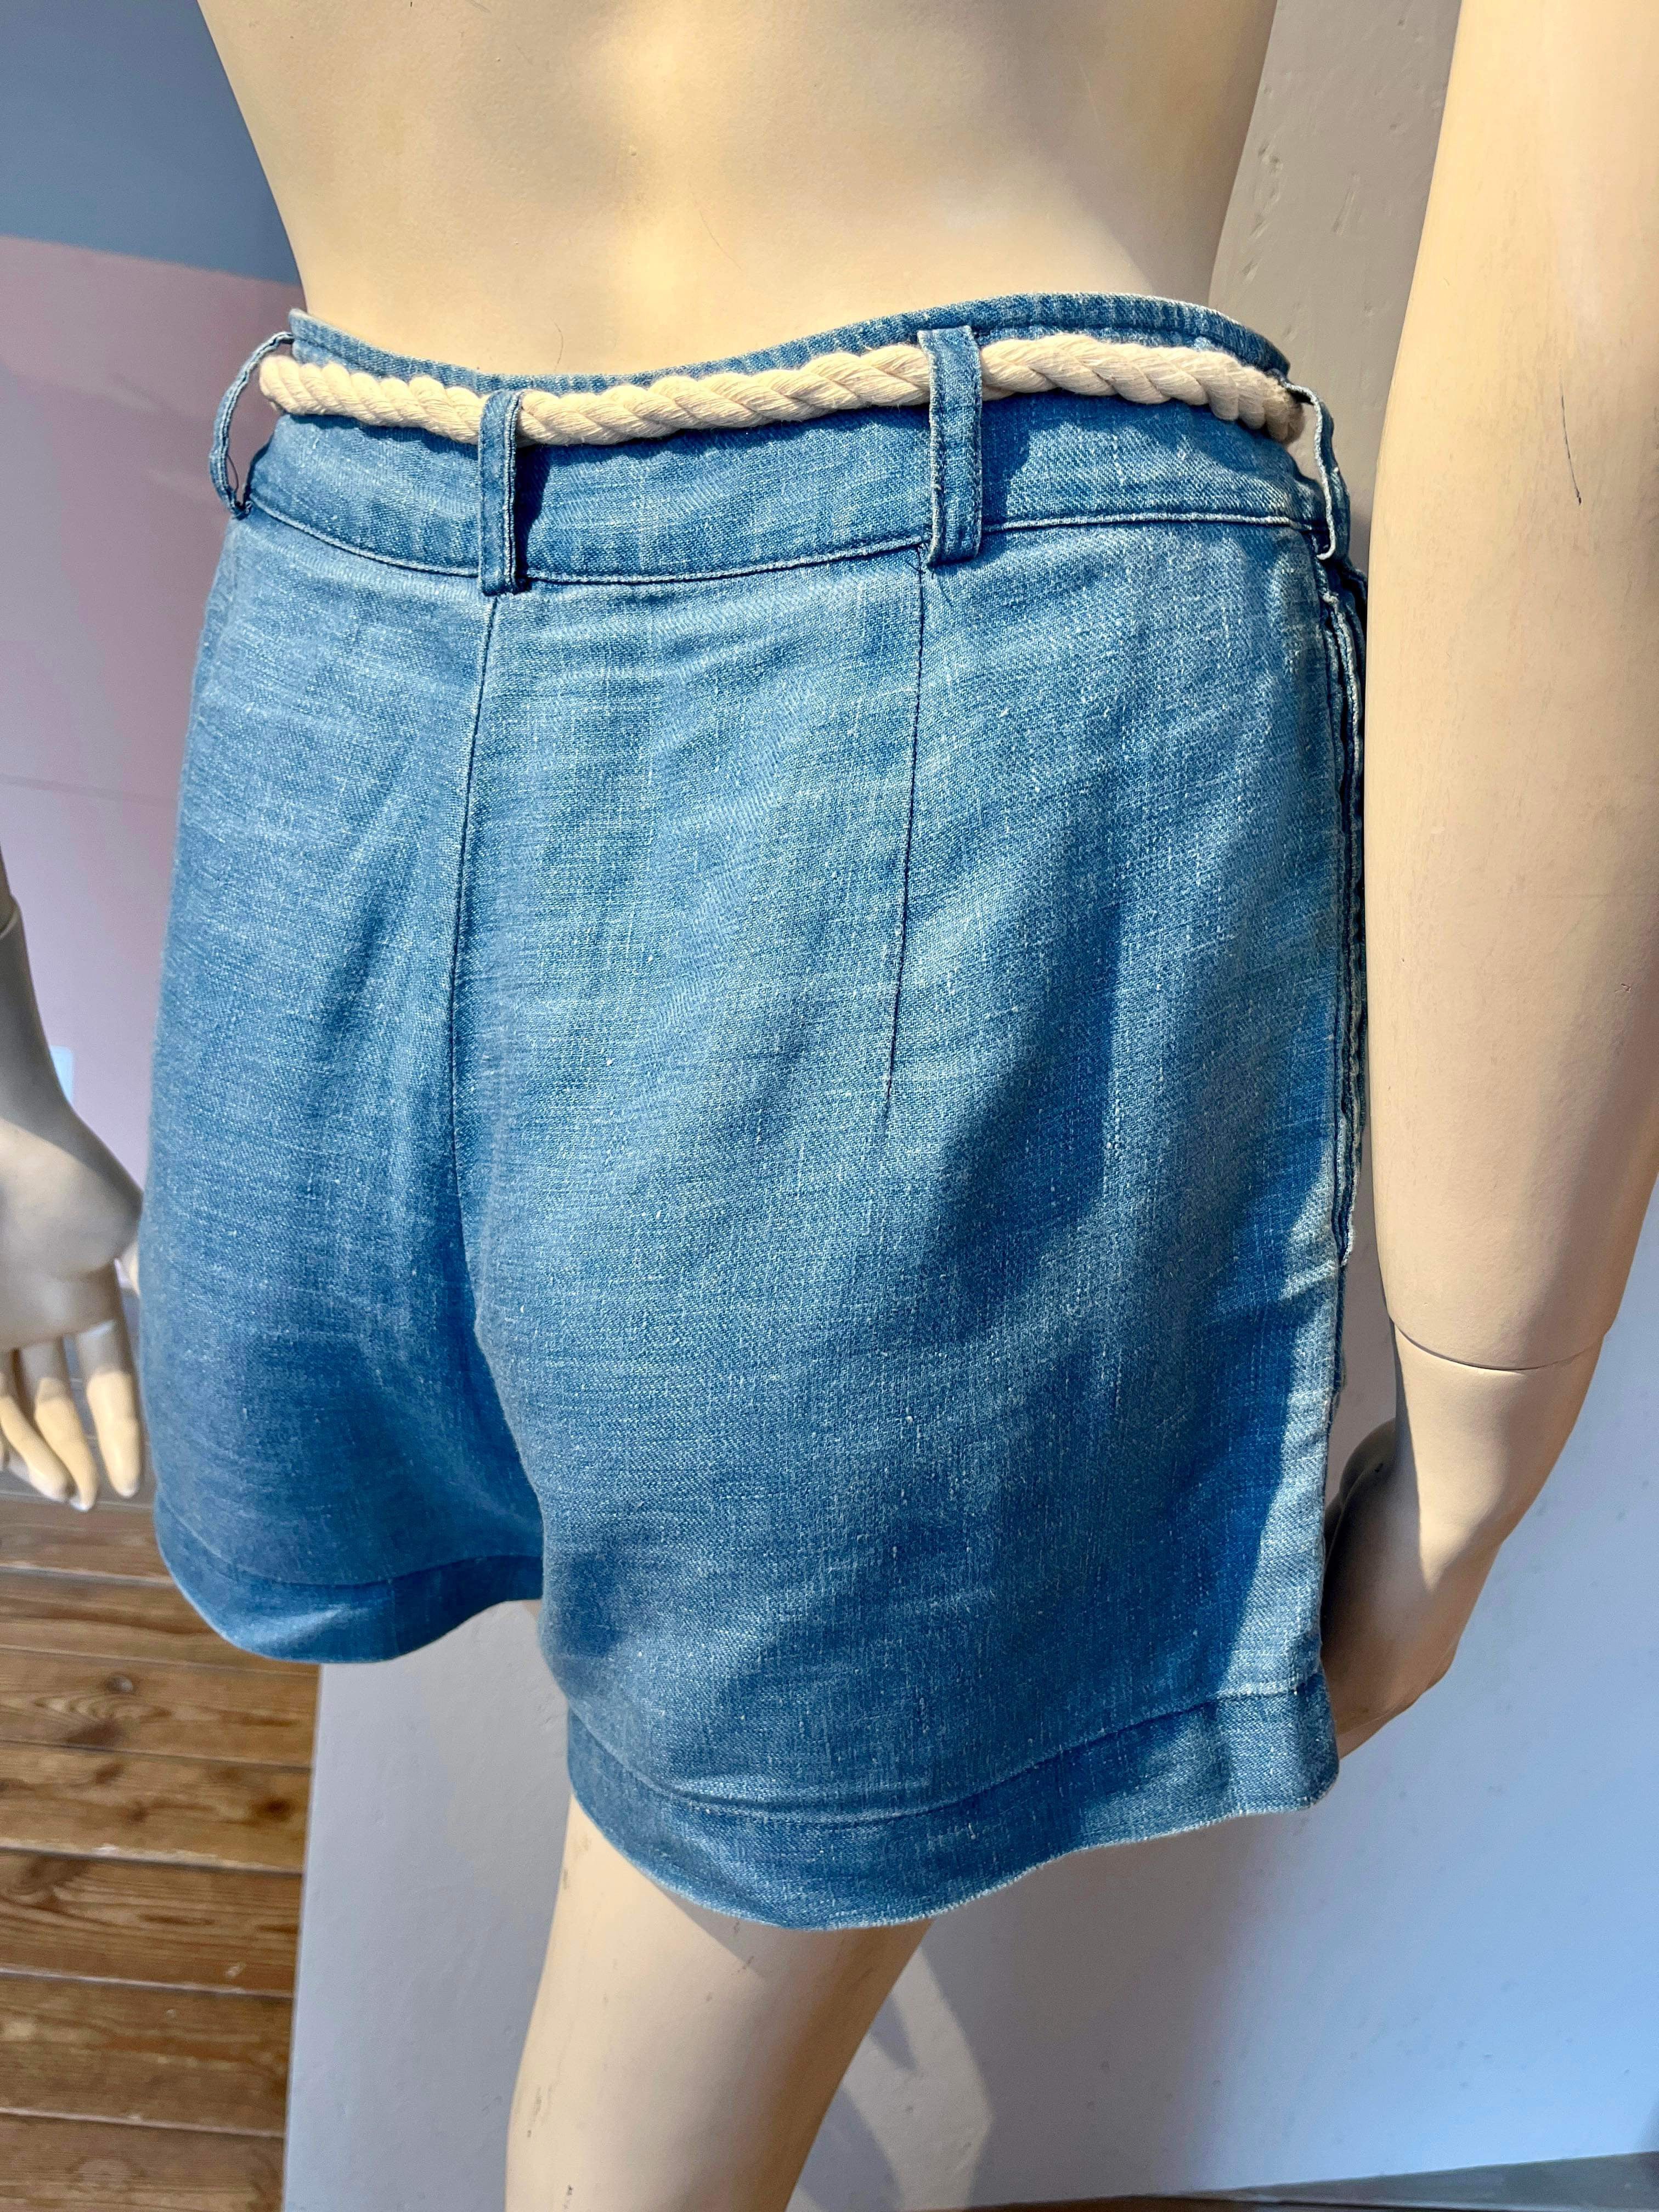 Ralph Lauren - Shorts - Size: S